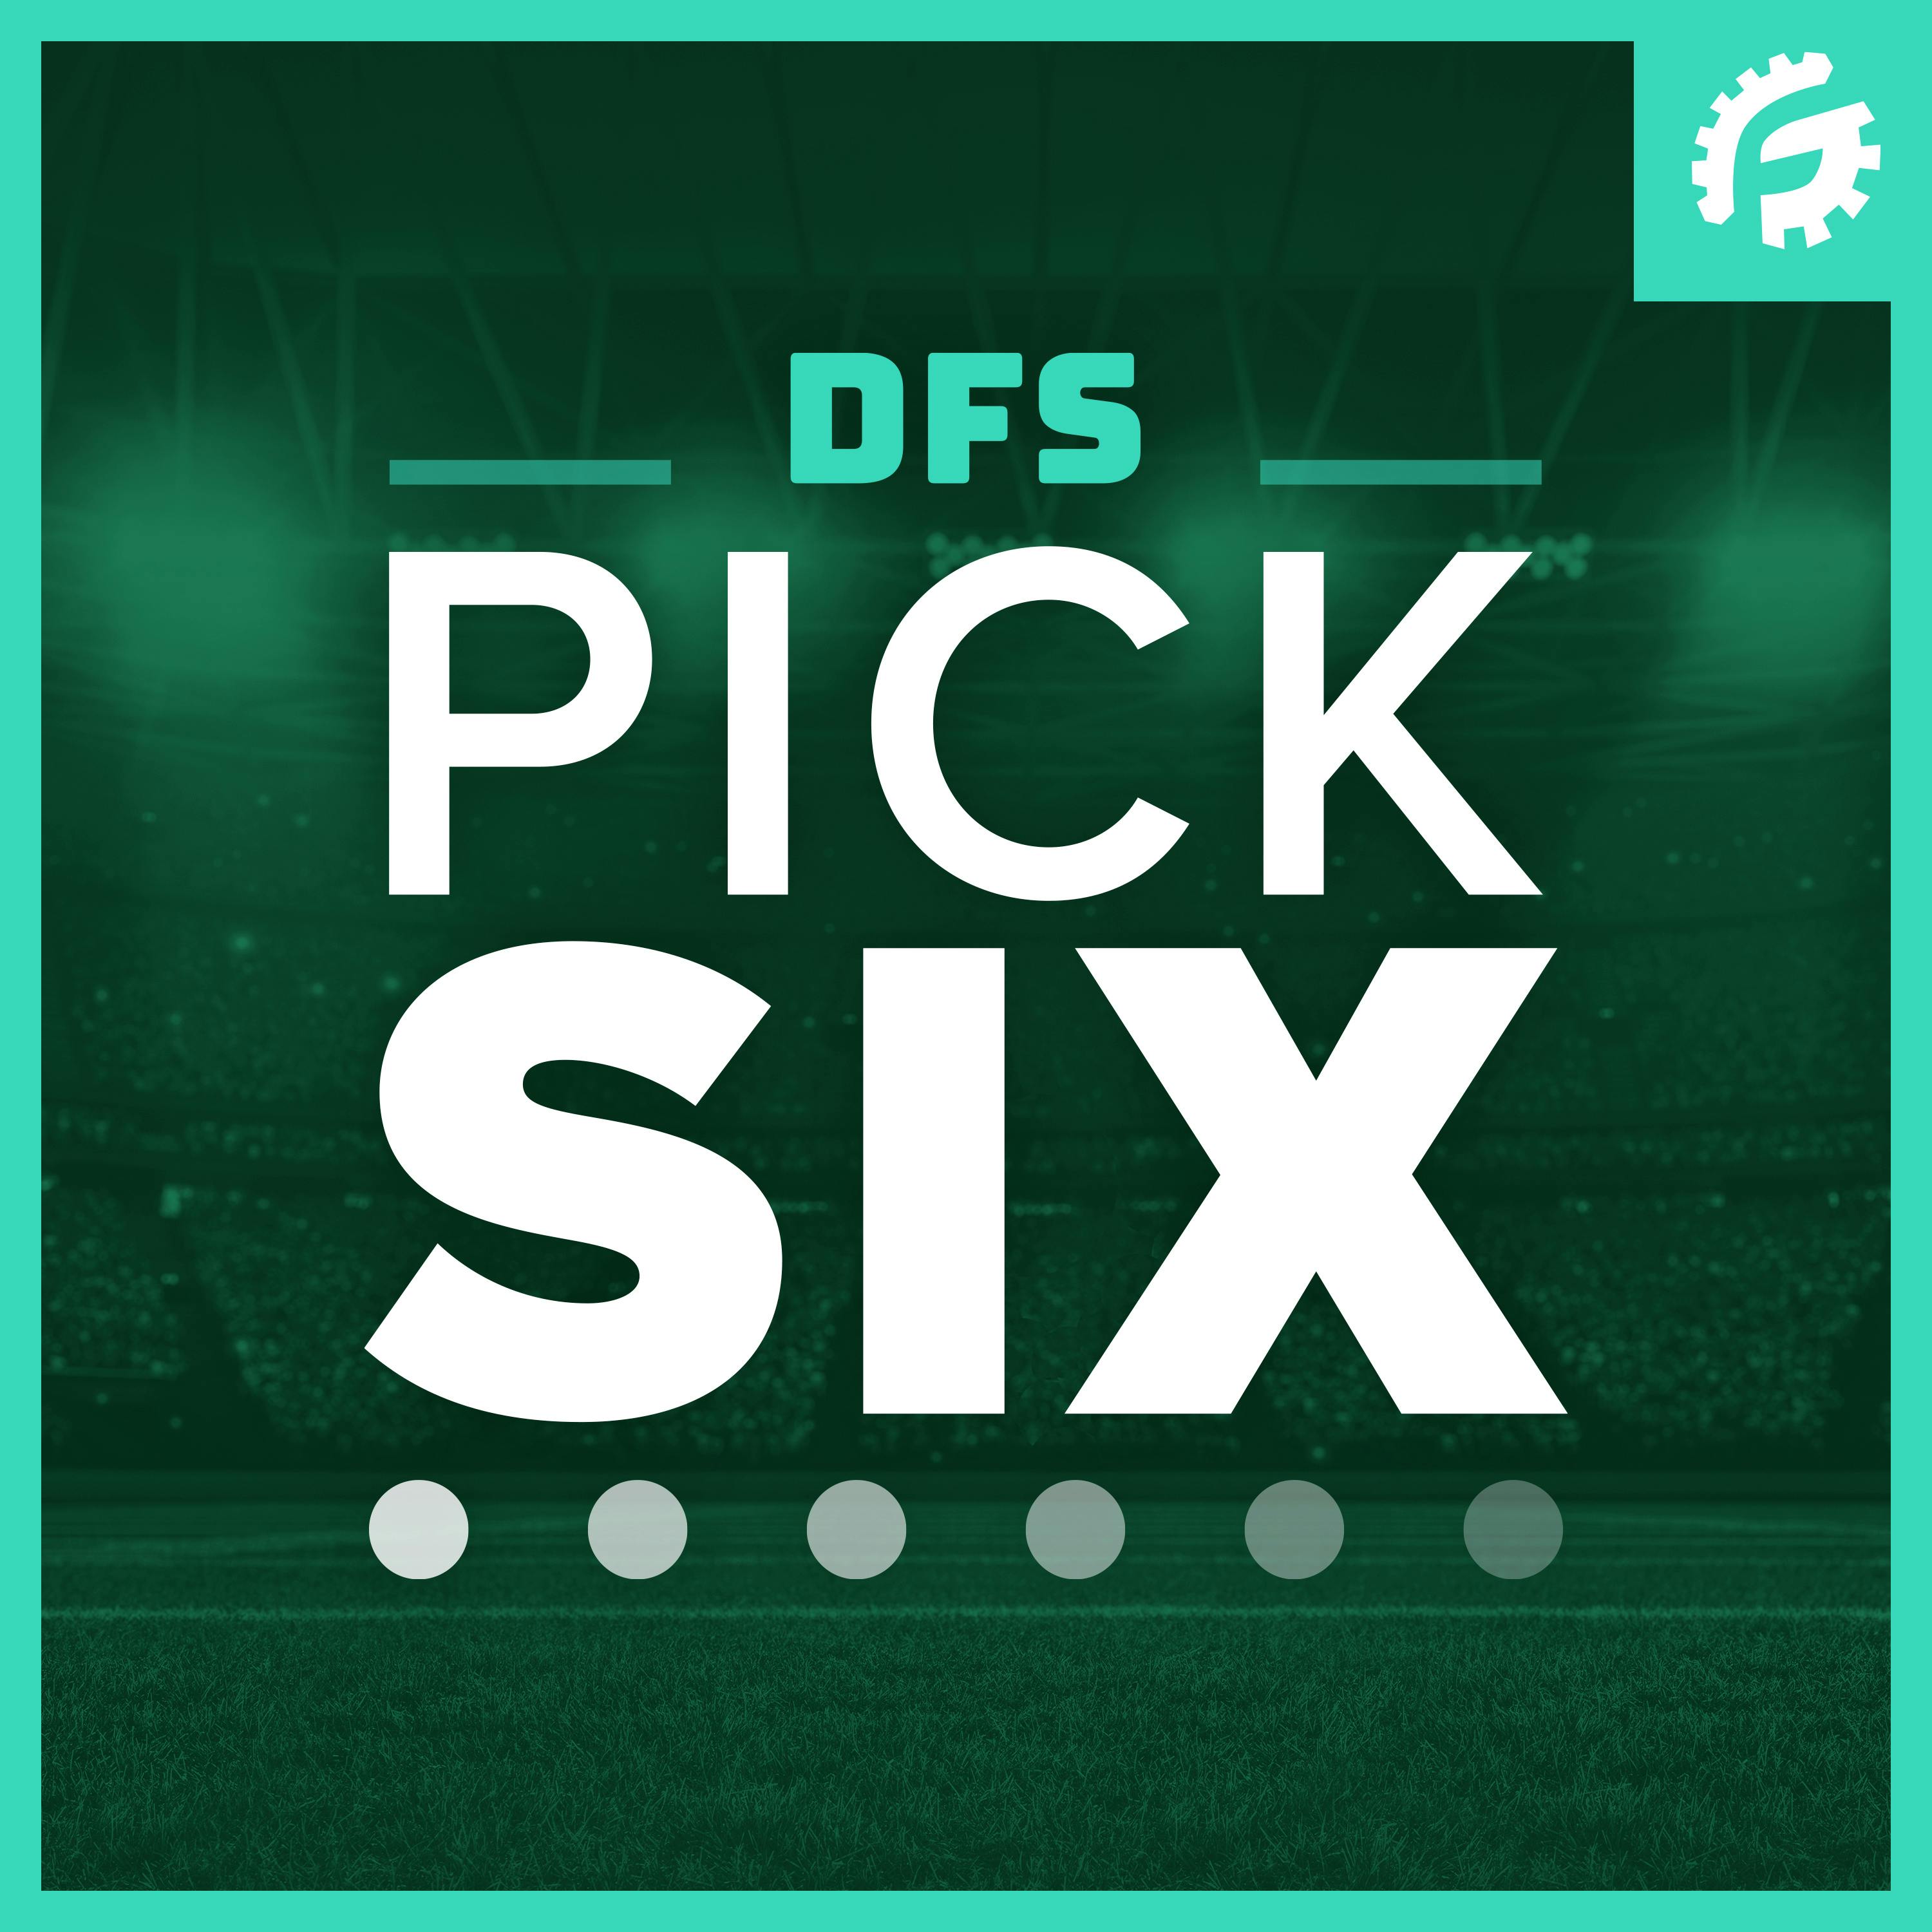 NFL DFS Pick 6 Show - Week 11